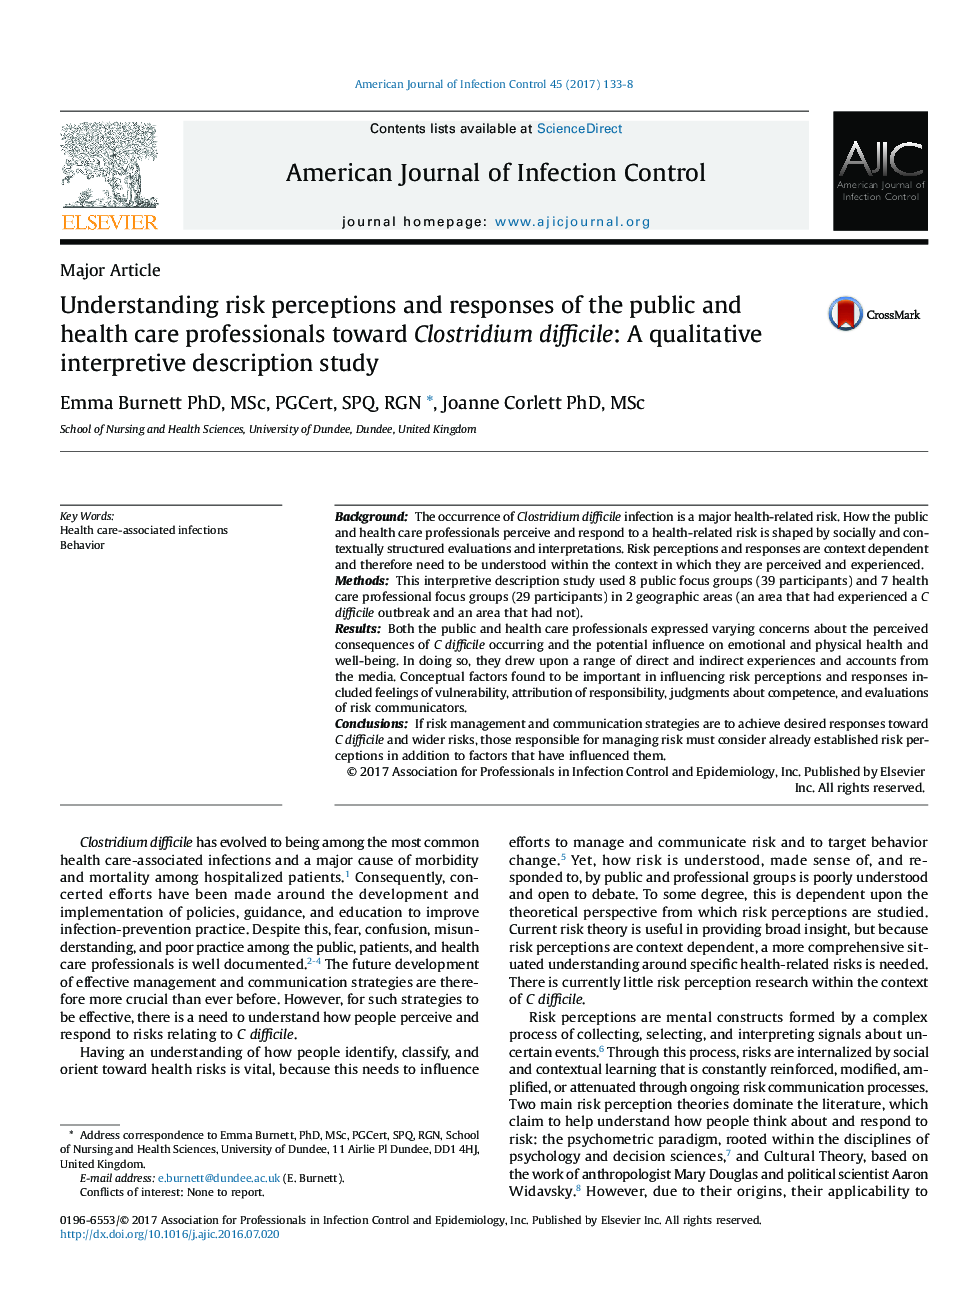 Understanding risk perceptions and responses of the public and health care professionals toward Clostridium difficile: A qualitative interpretive description study